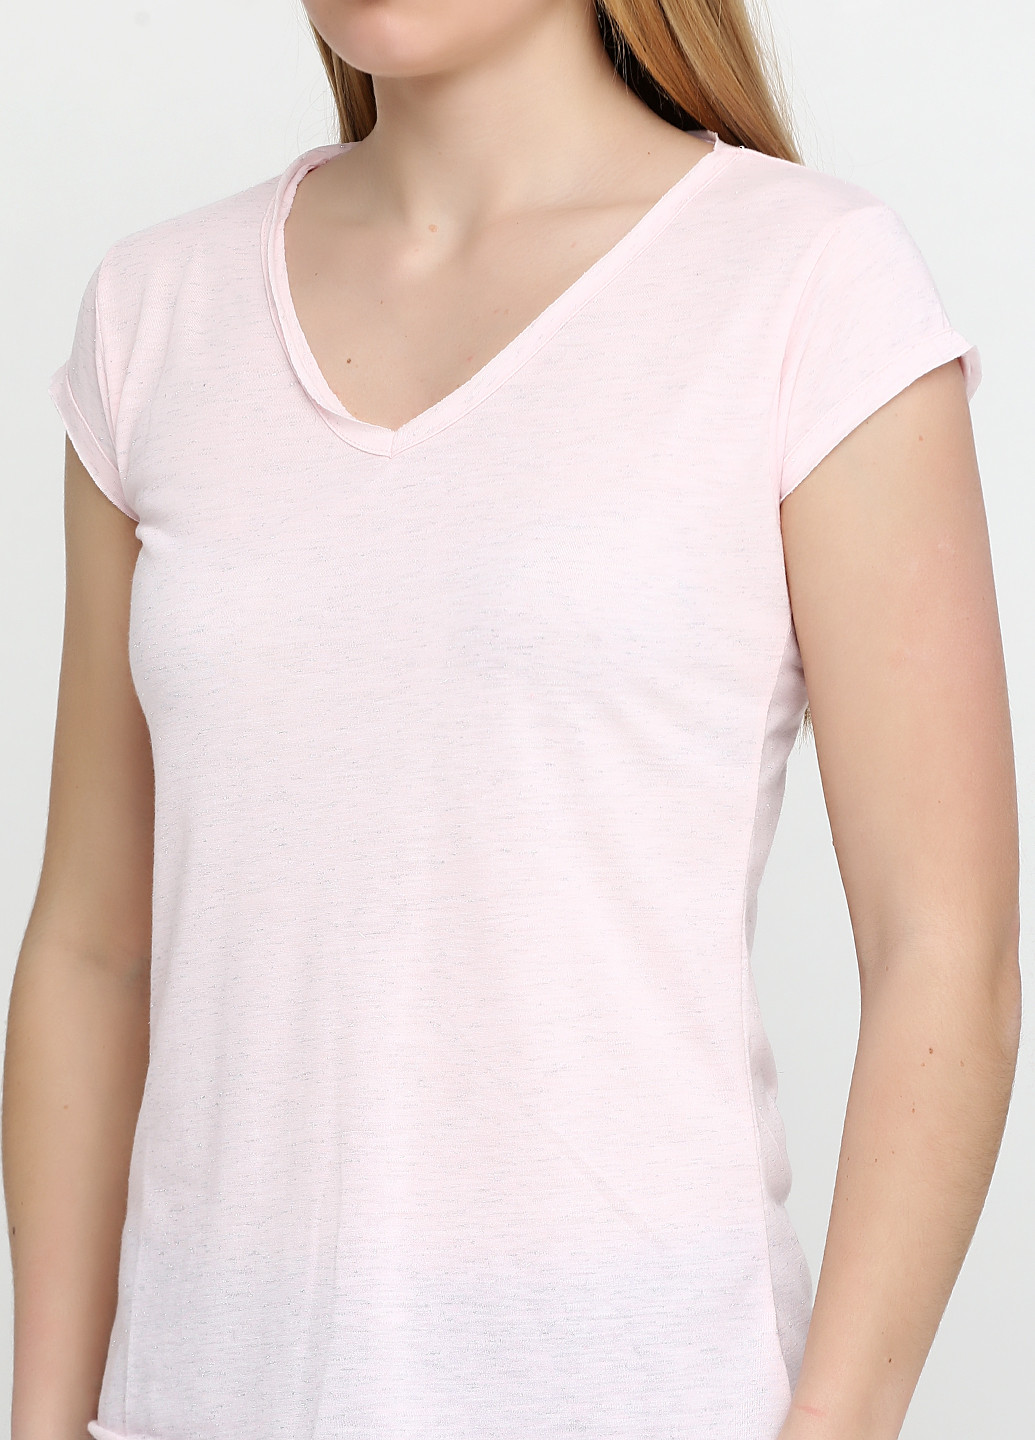 Бледно-розовая летняя футболка Spora